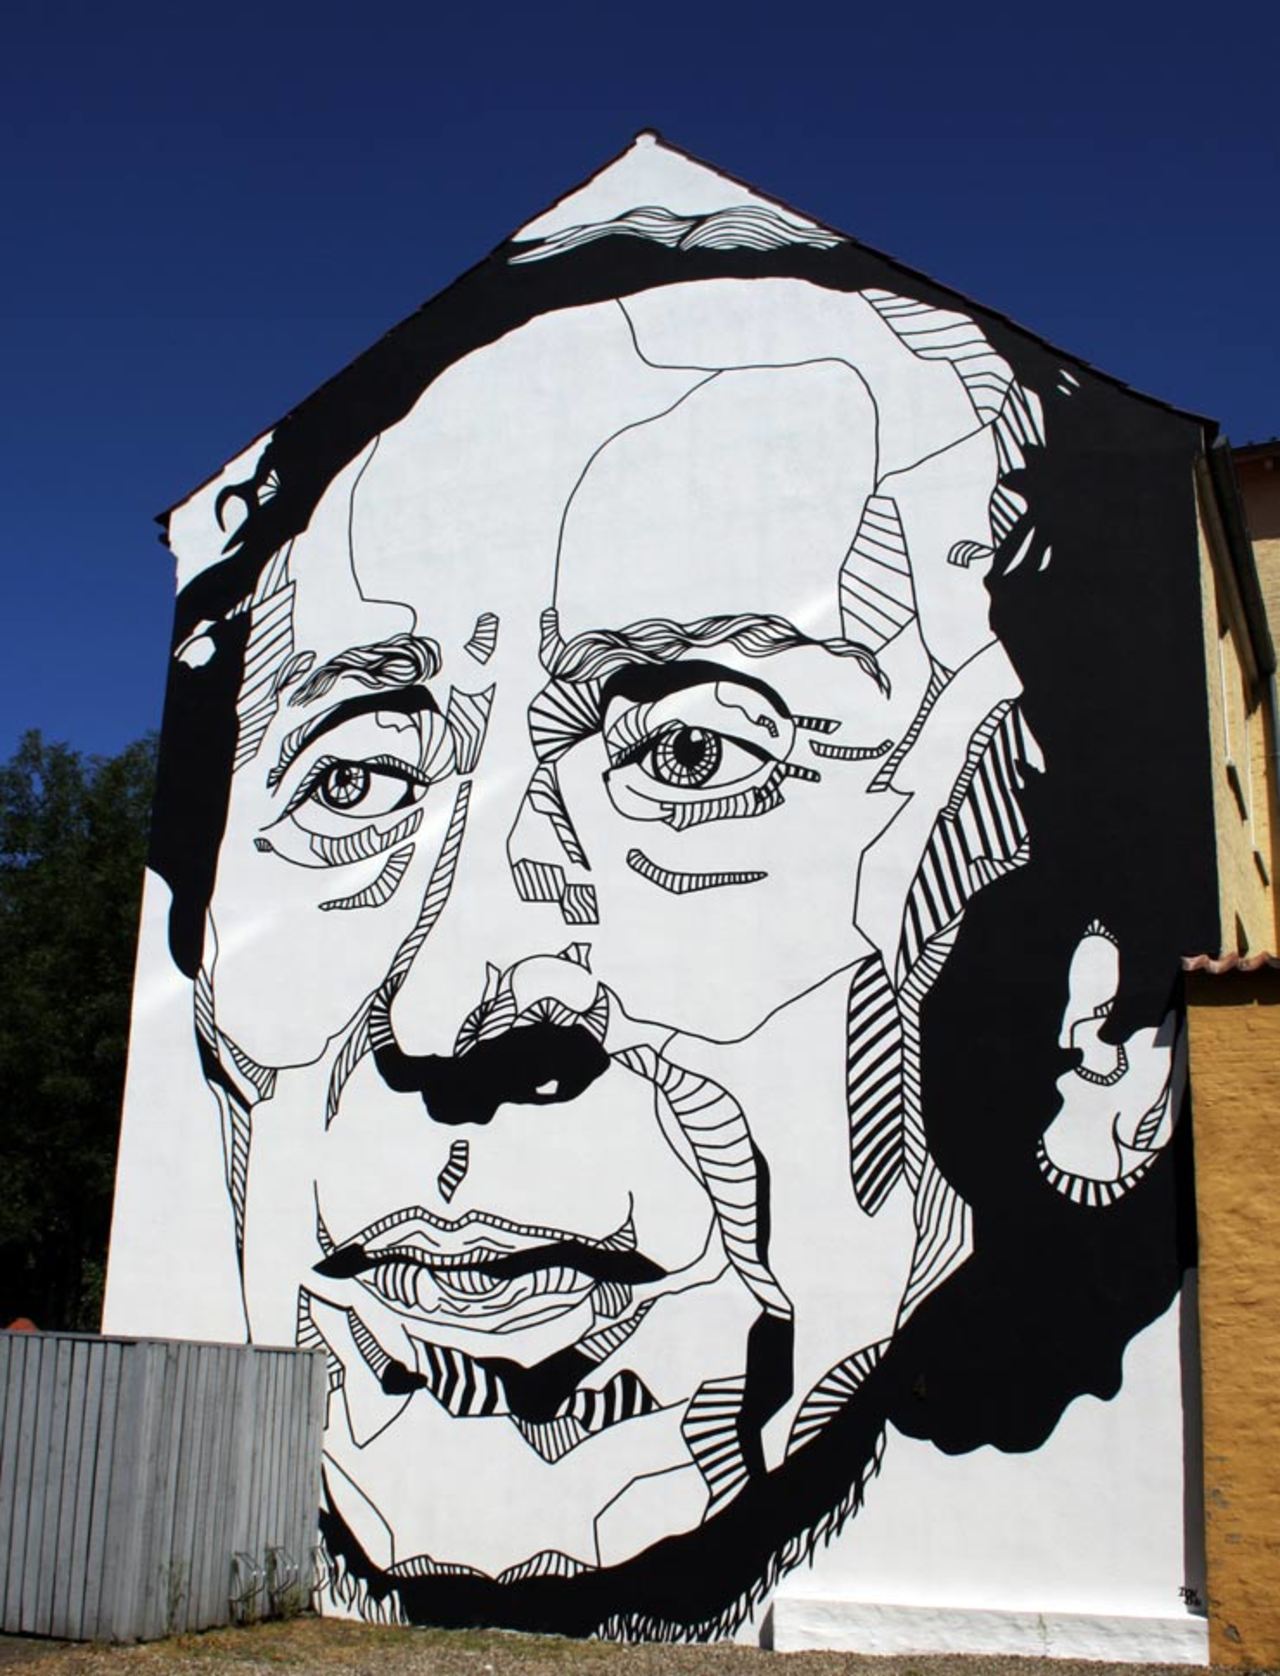 "Hans Christian Andersen" | Impressive mural by Danish artist Don John in Odense, Denmark #graffiti #artderue #arturbain #artedistrada #arteurbana #streetart #urbanart #artecallejero #arteurbano #donjohn #denmark  via Pinterest | https://goo.gl/bpZvz1 https://t.co/hI8JgOu2qR